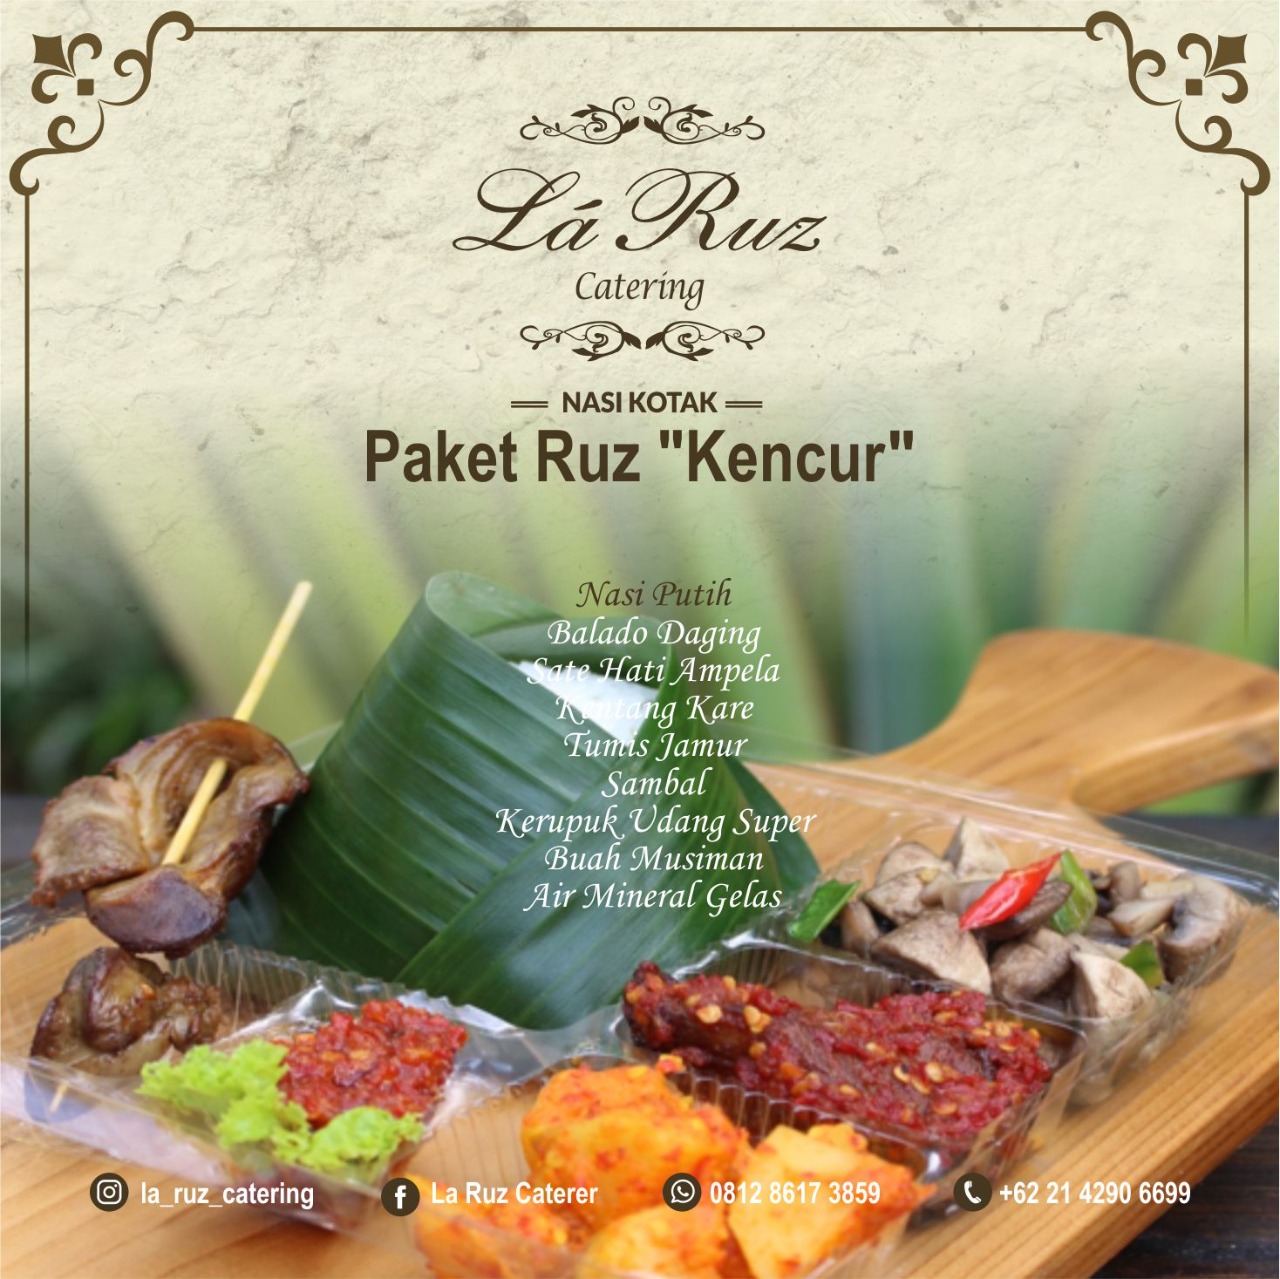 Paket Ruz Kencur by La Ruz Catering